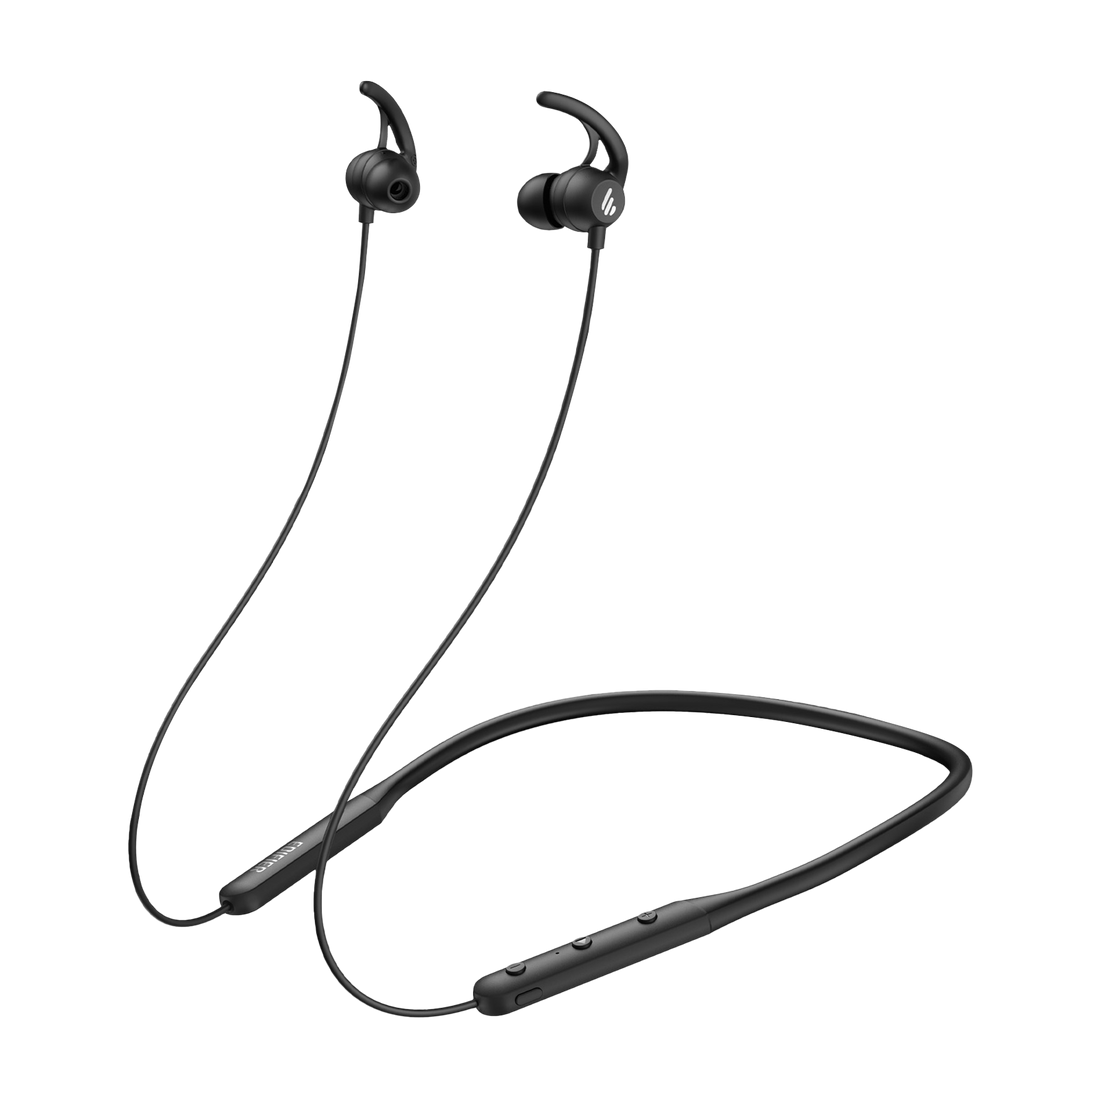 W280NB Wireless Sports Headphones